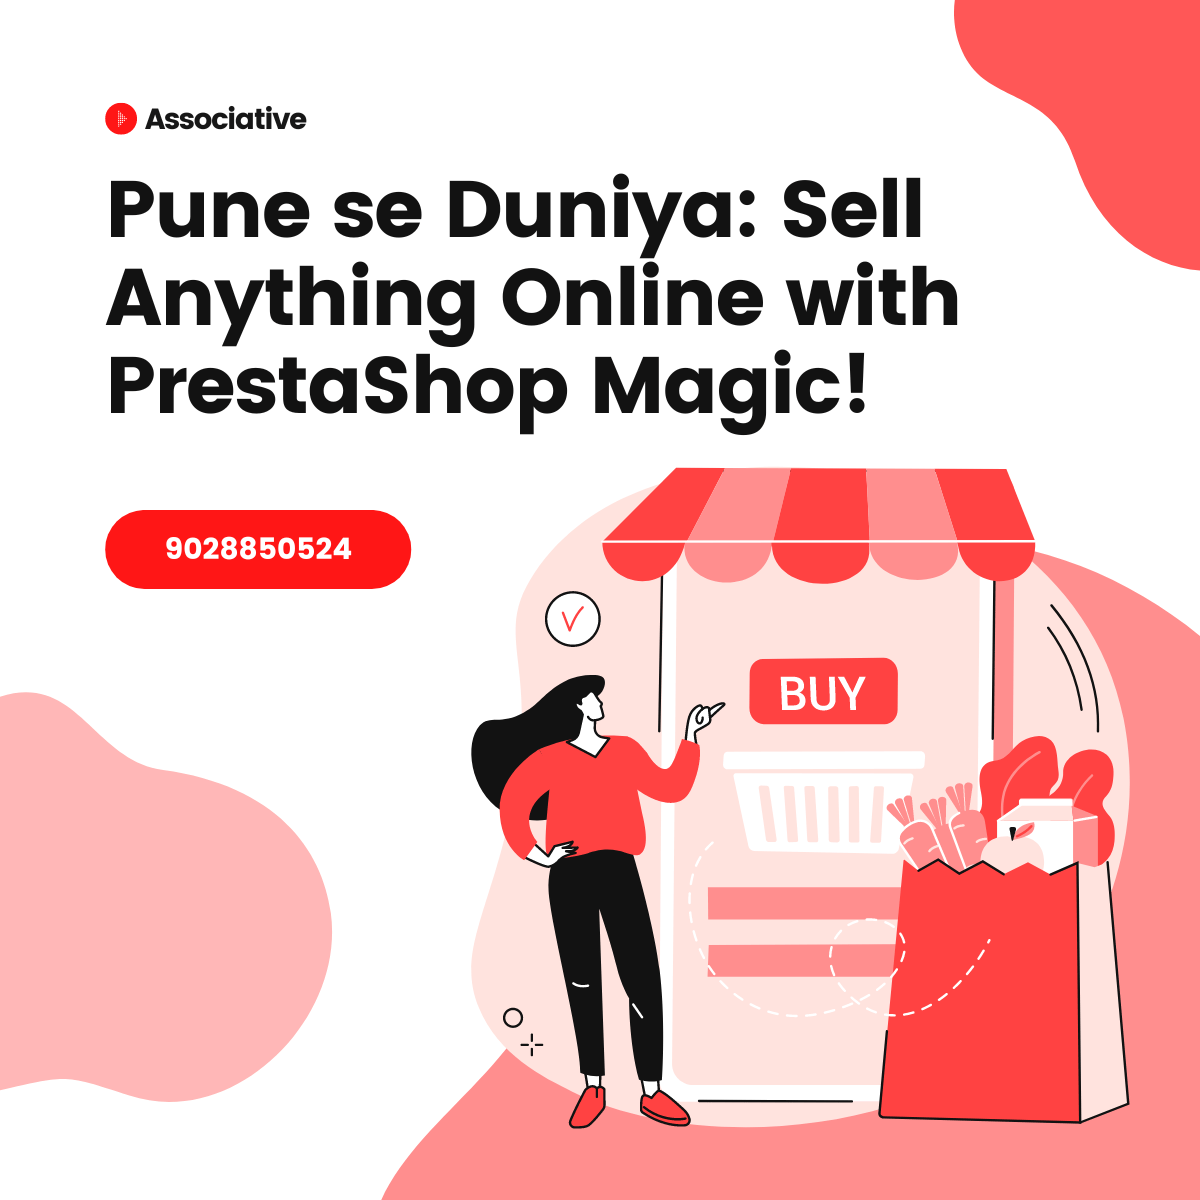 Pune se Duniya: Sell Anything Online with PrestaShop Magic!